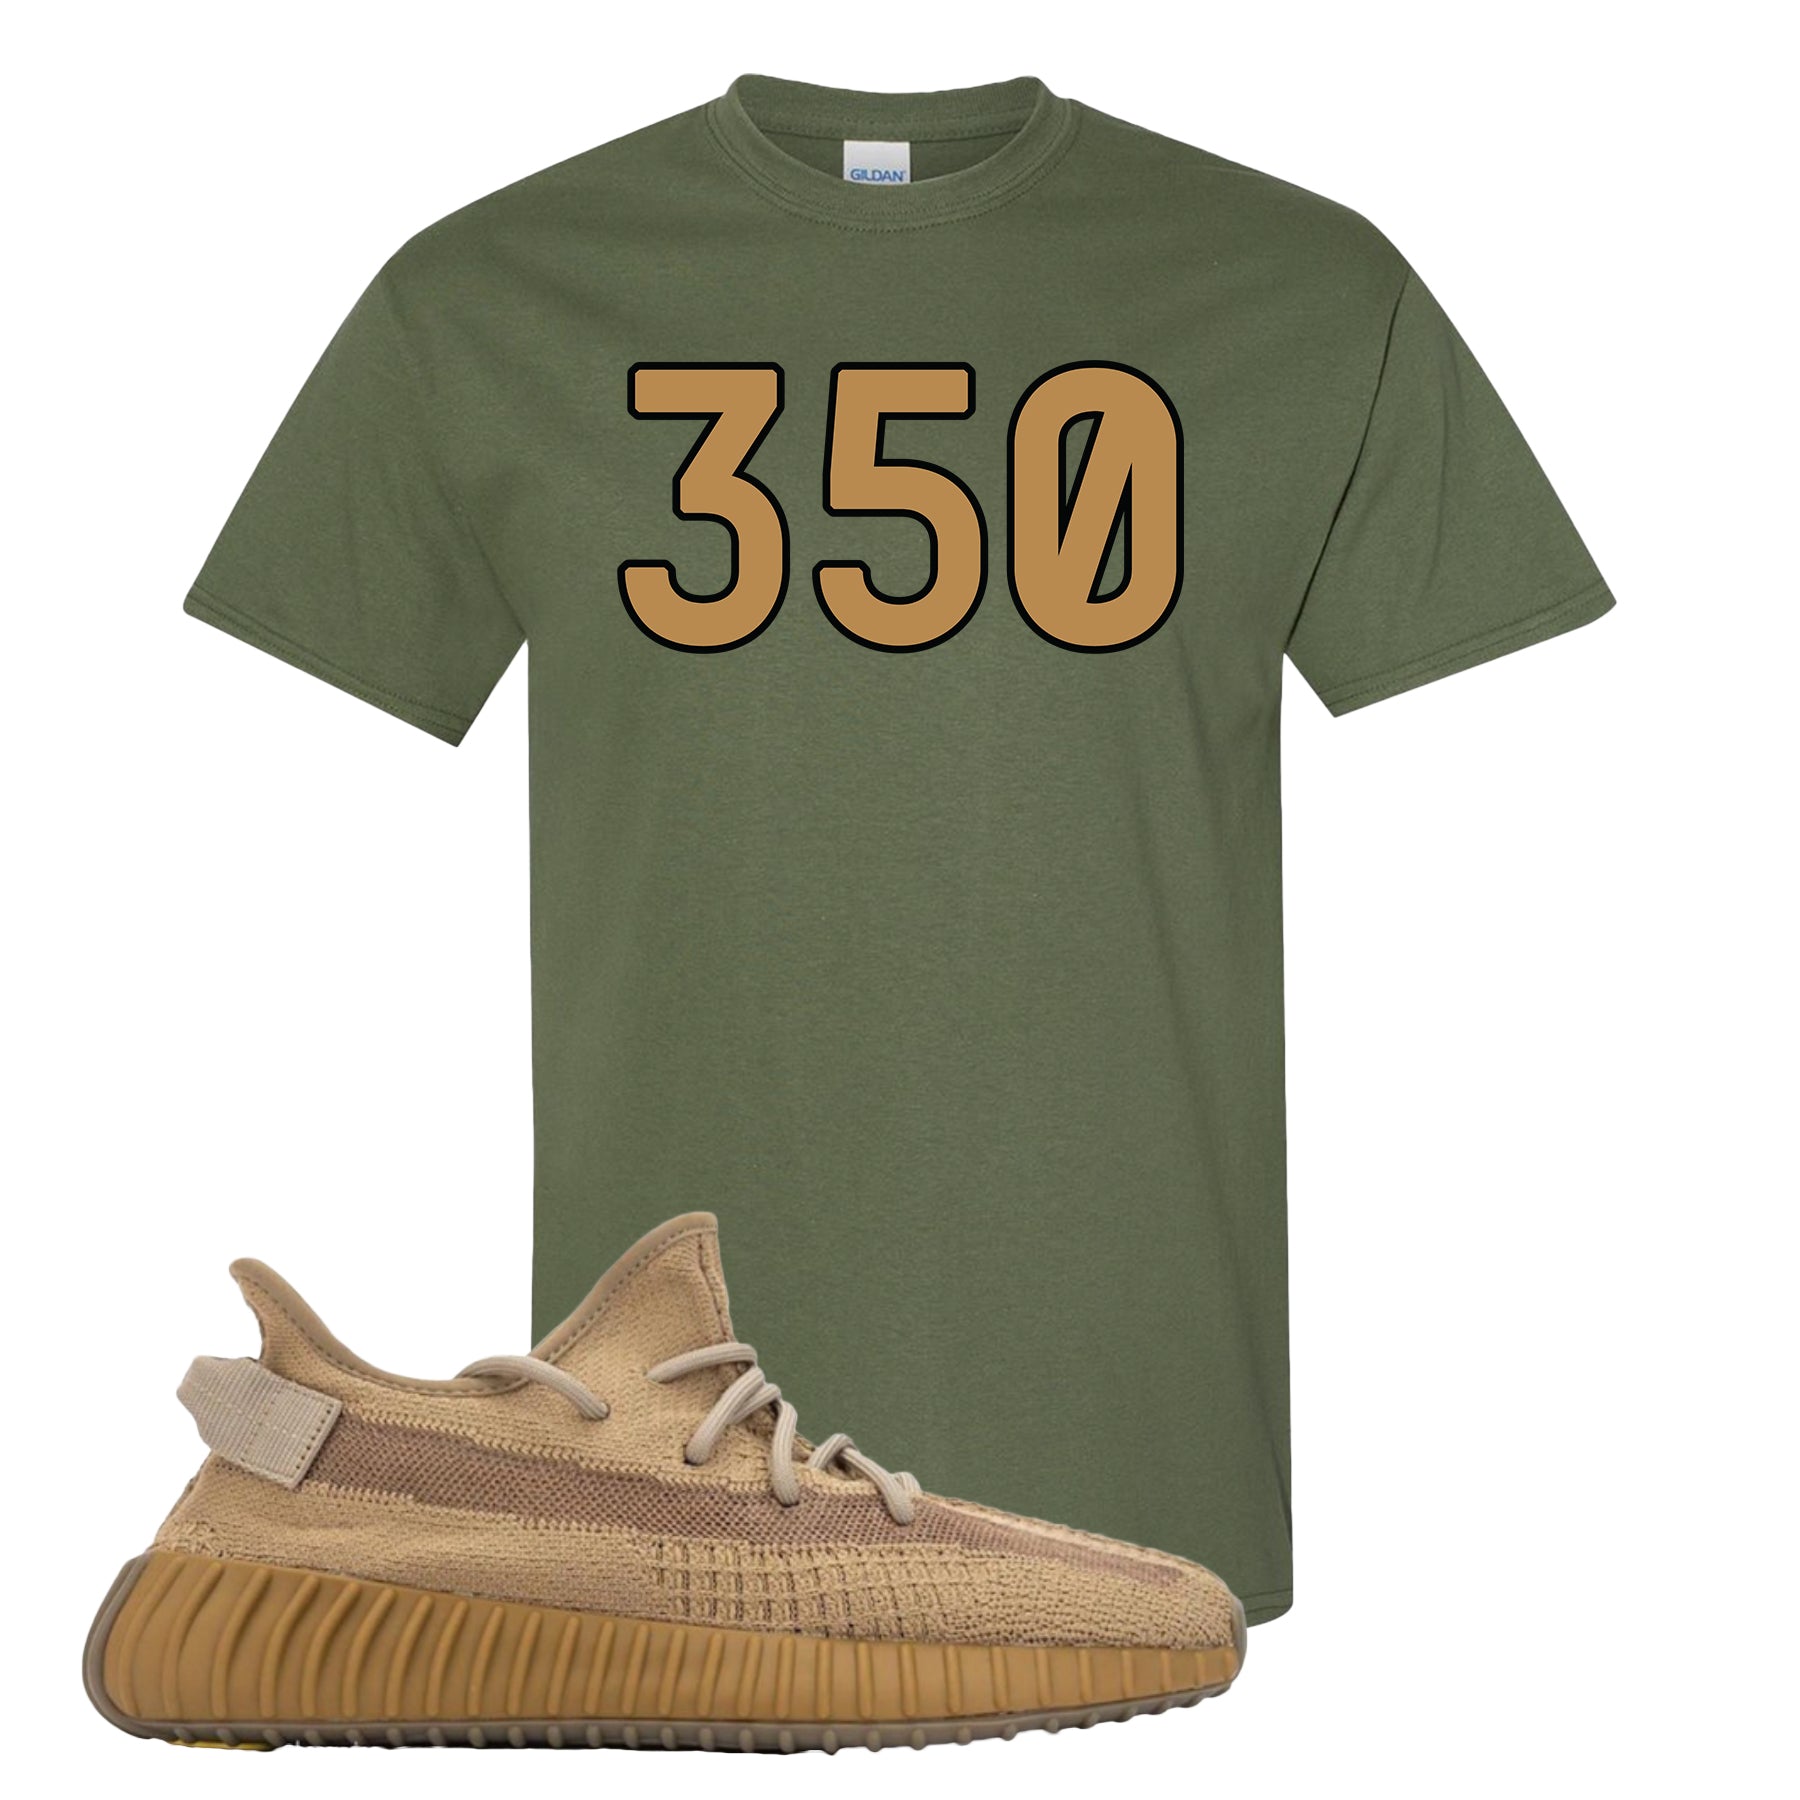 yeezy 350 shirt